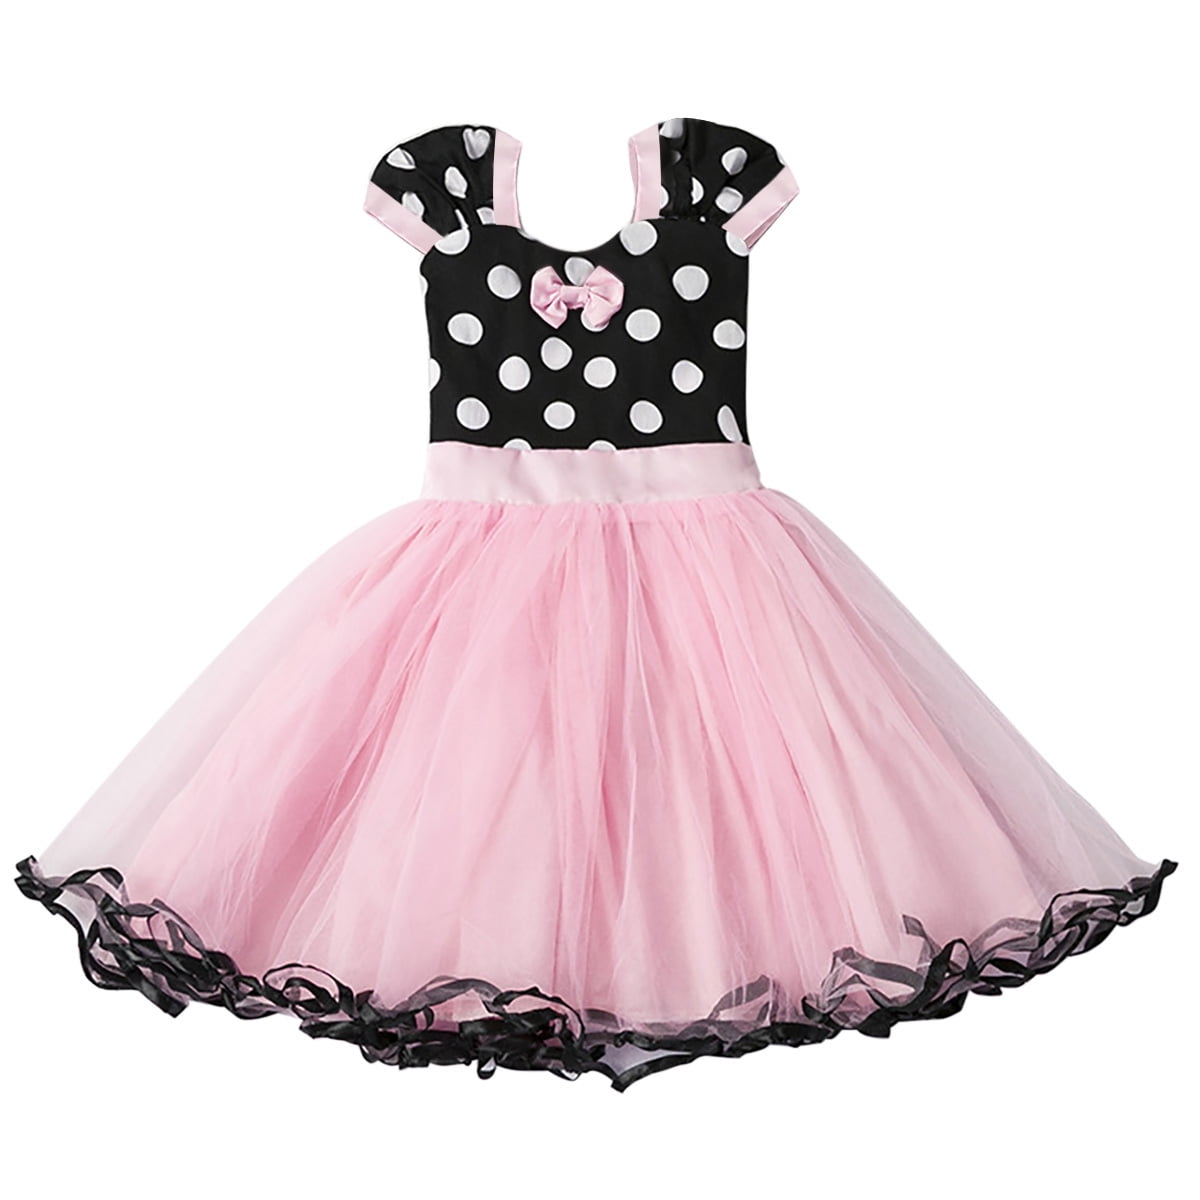 Kid Baby Girl Polka Dots Costume Party Halloween Xmas Cosplay Fancy Dress Up Set 